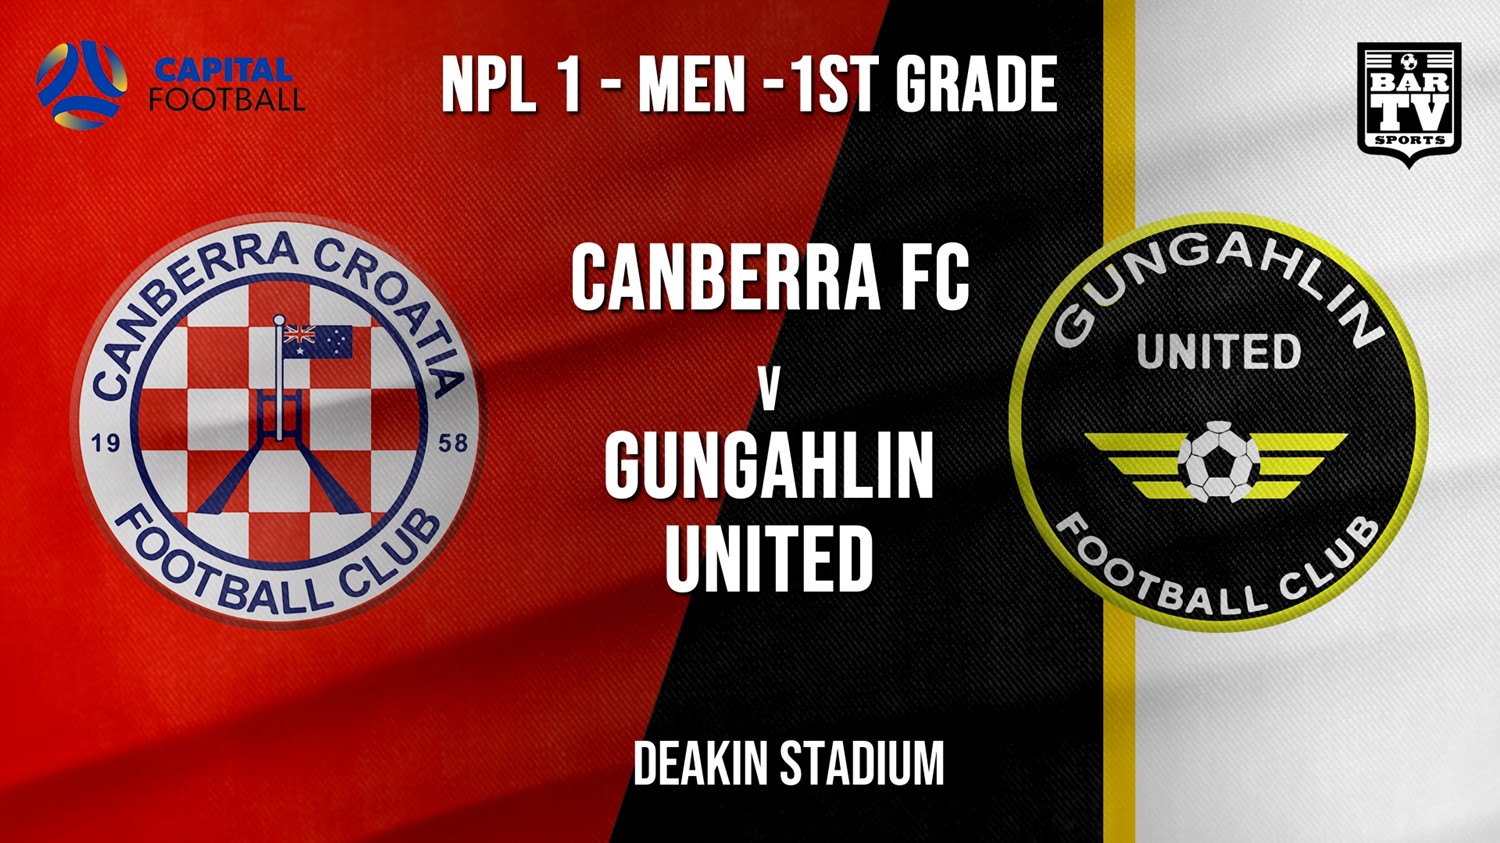 NPL - CAPITAL Canberra FC v Gungahlin United FC Minigame Slate Image